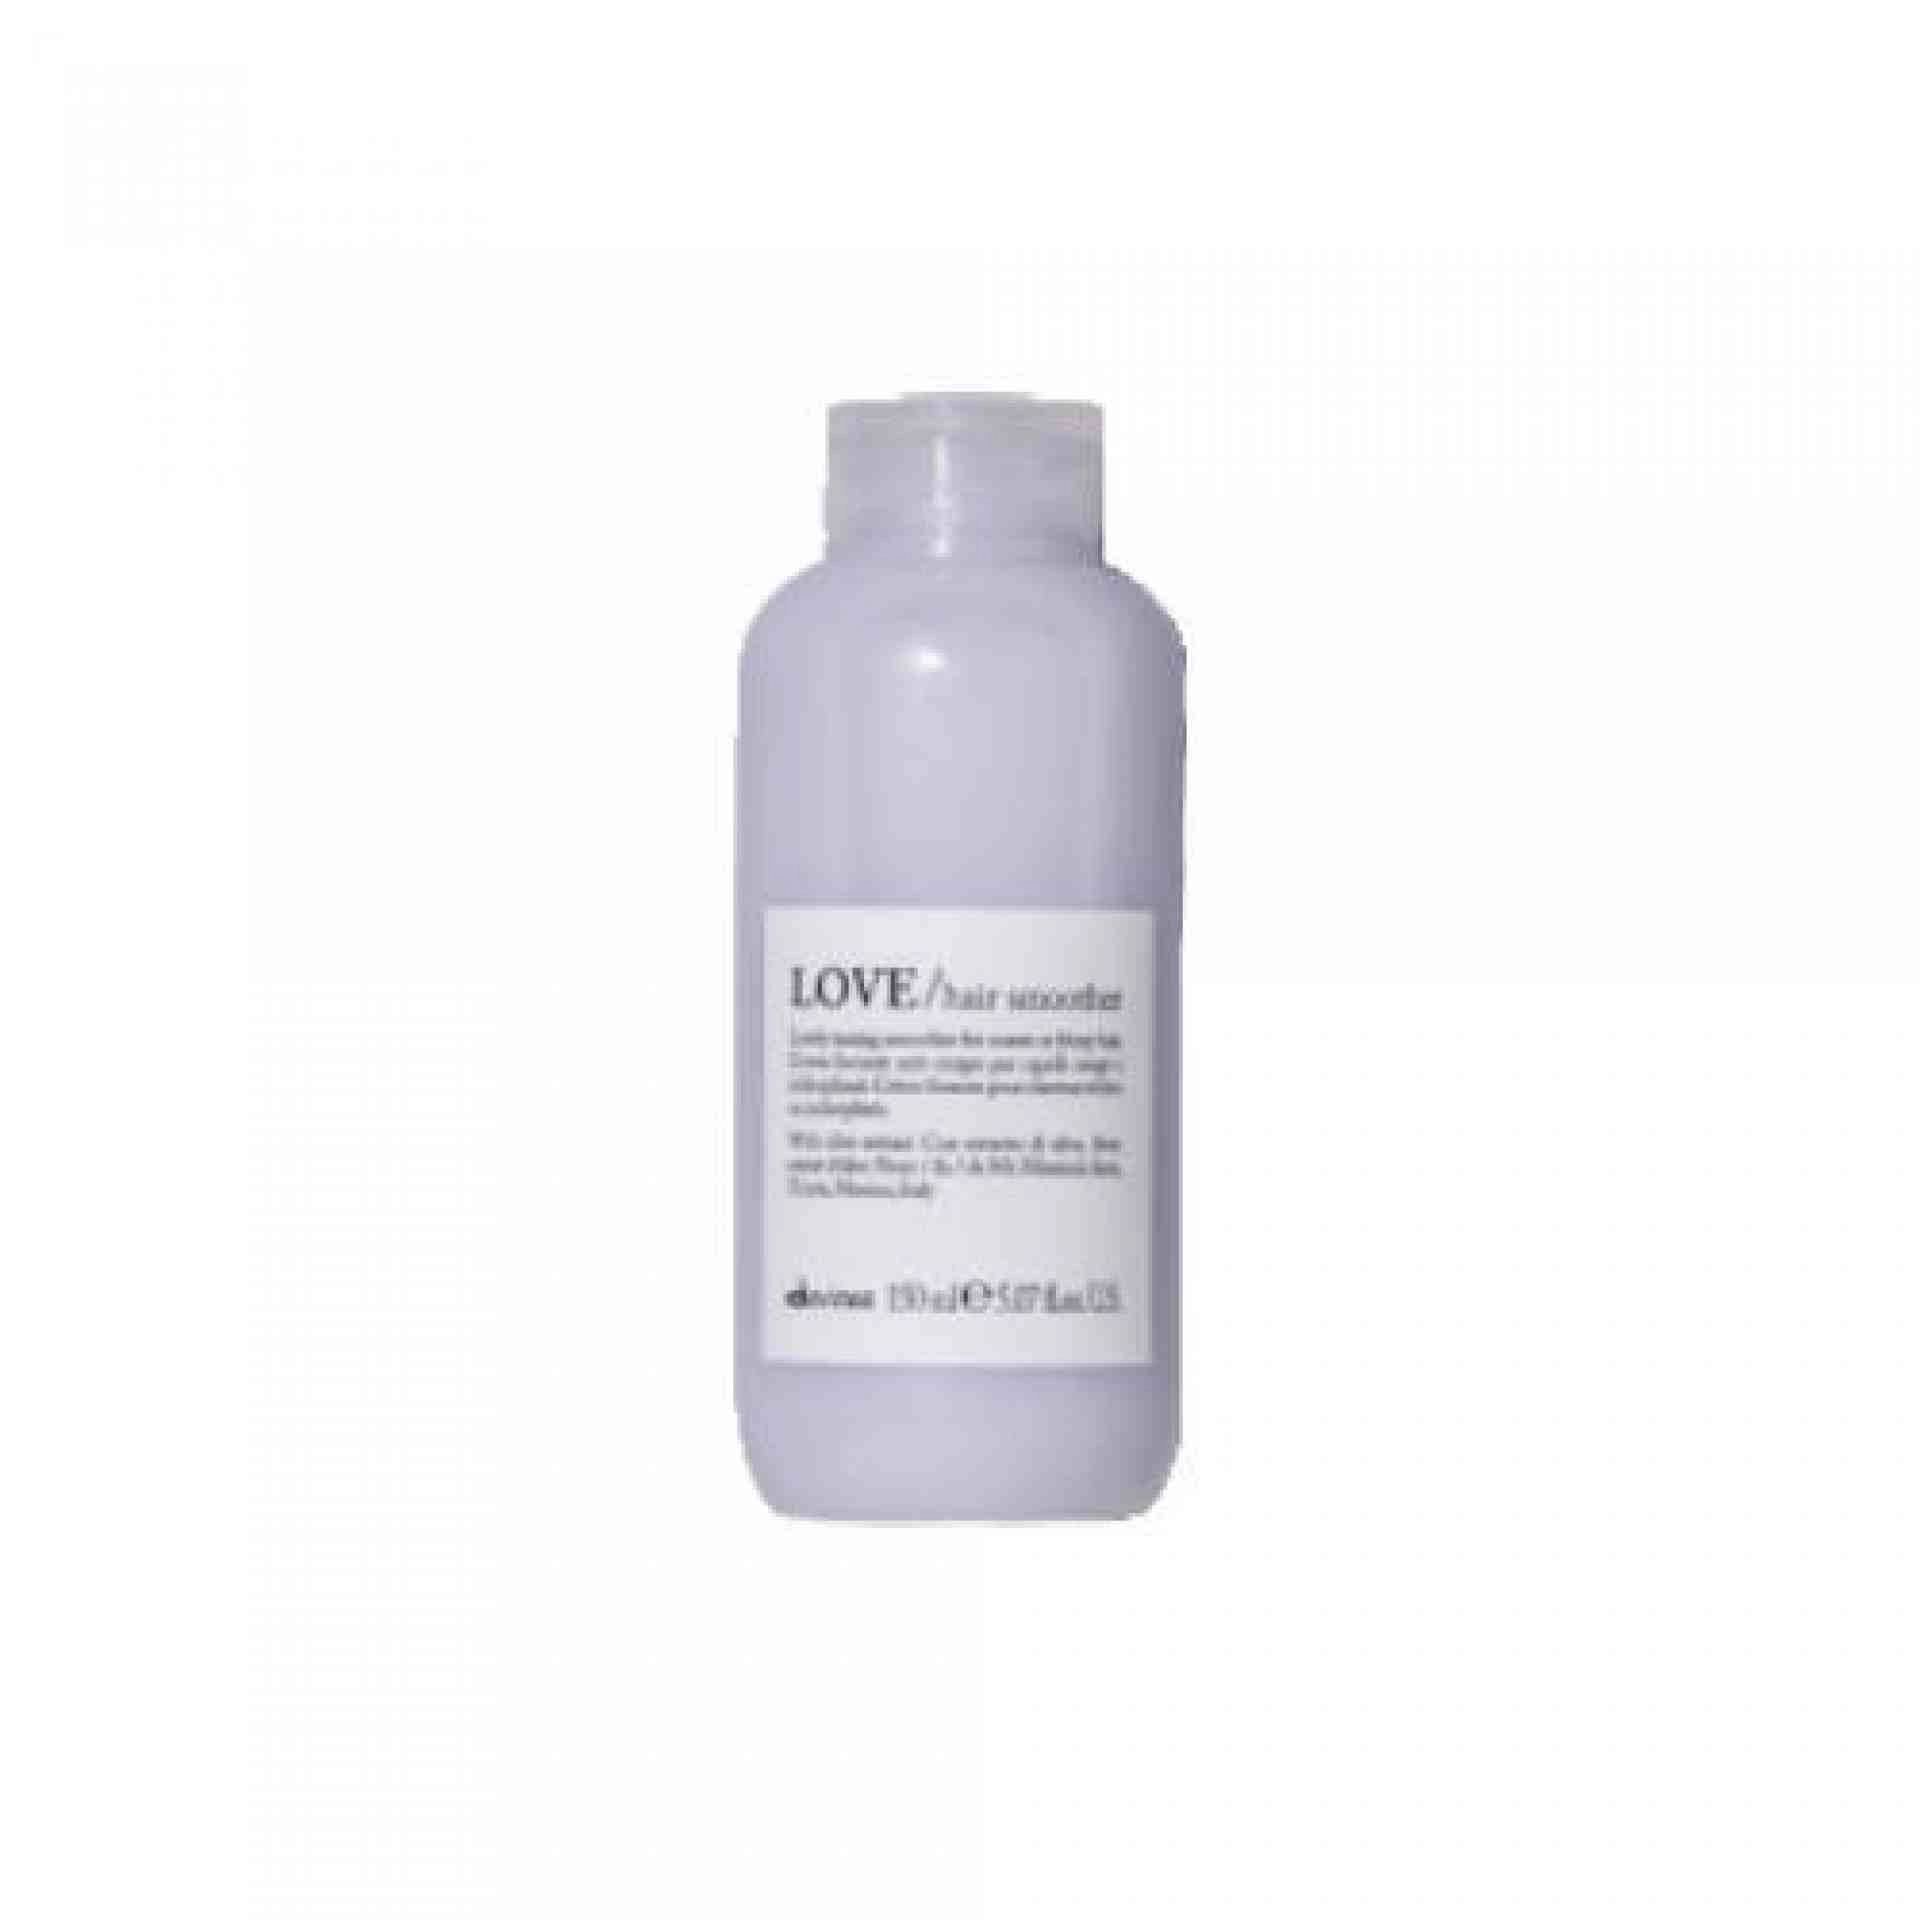 LOVE SMOOTHING / Hair Smoother | Crema anti-encrespamiento 150ml - Essential Haircare - Davines ®